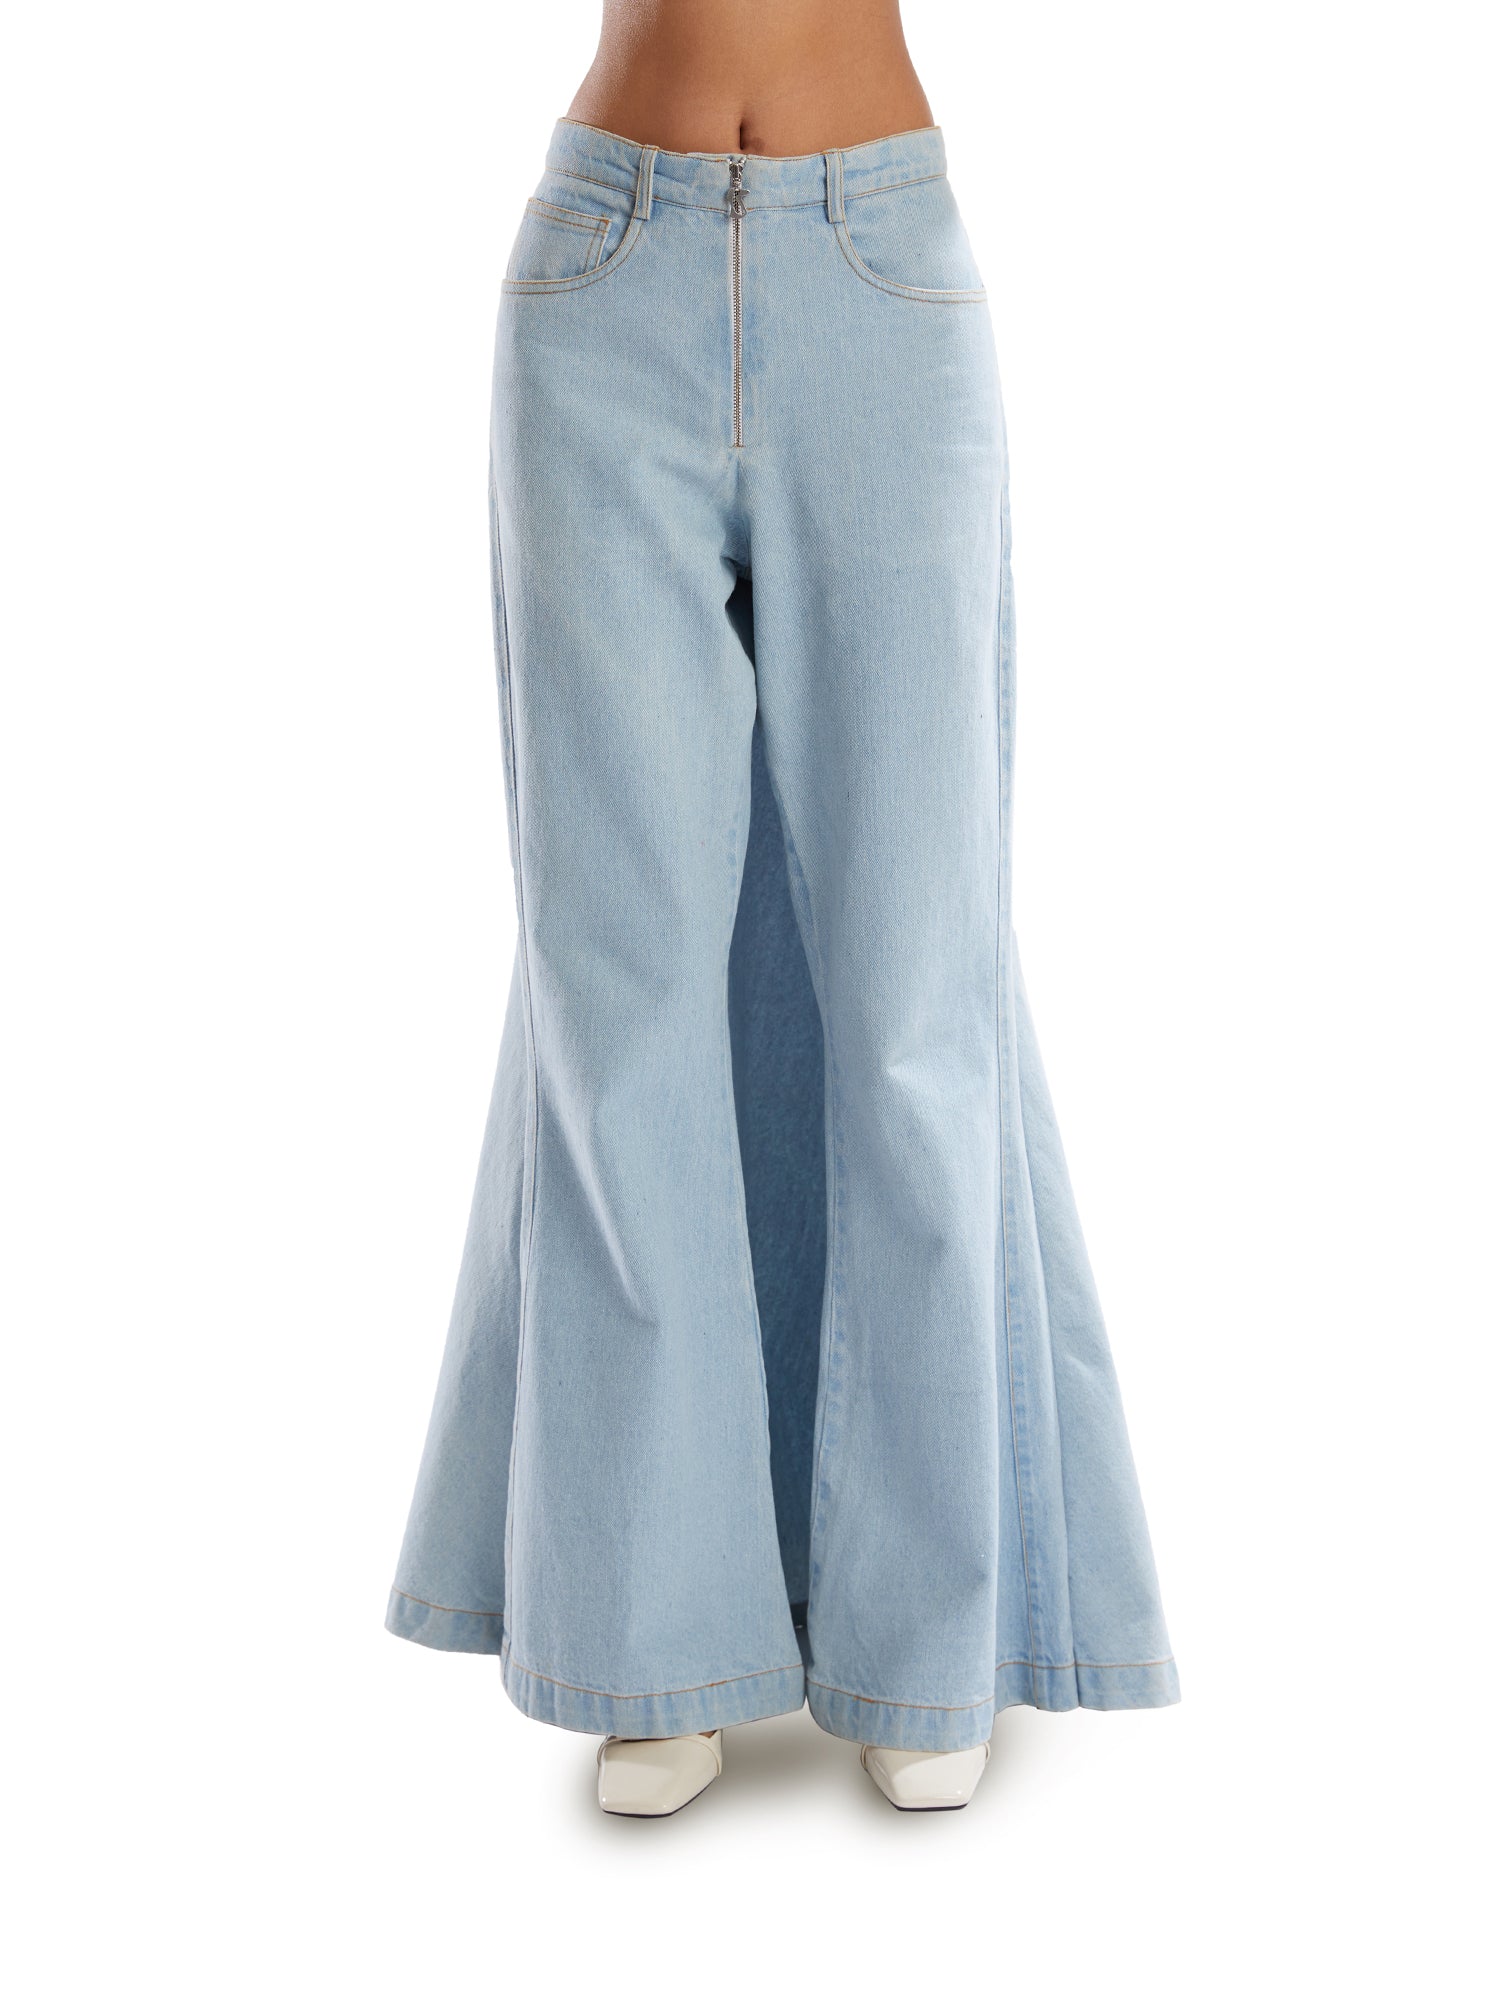 Blue denim skirt pants